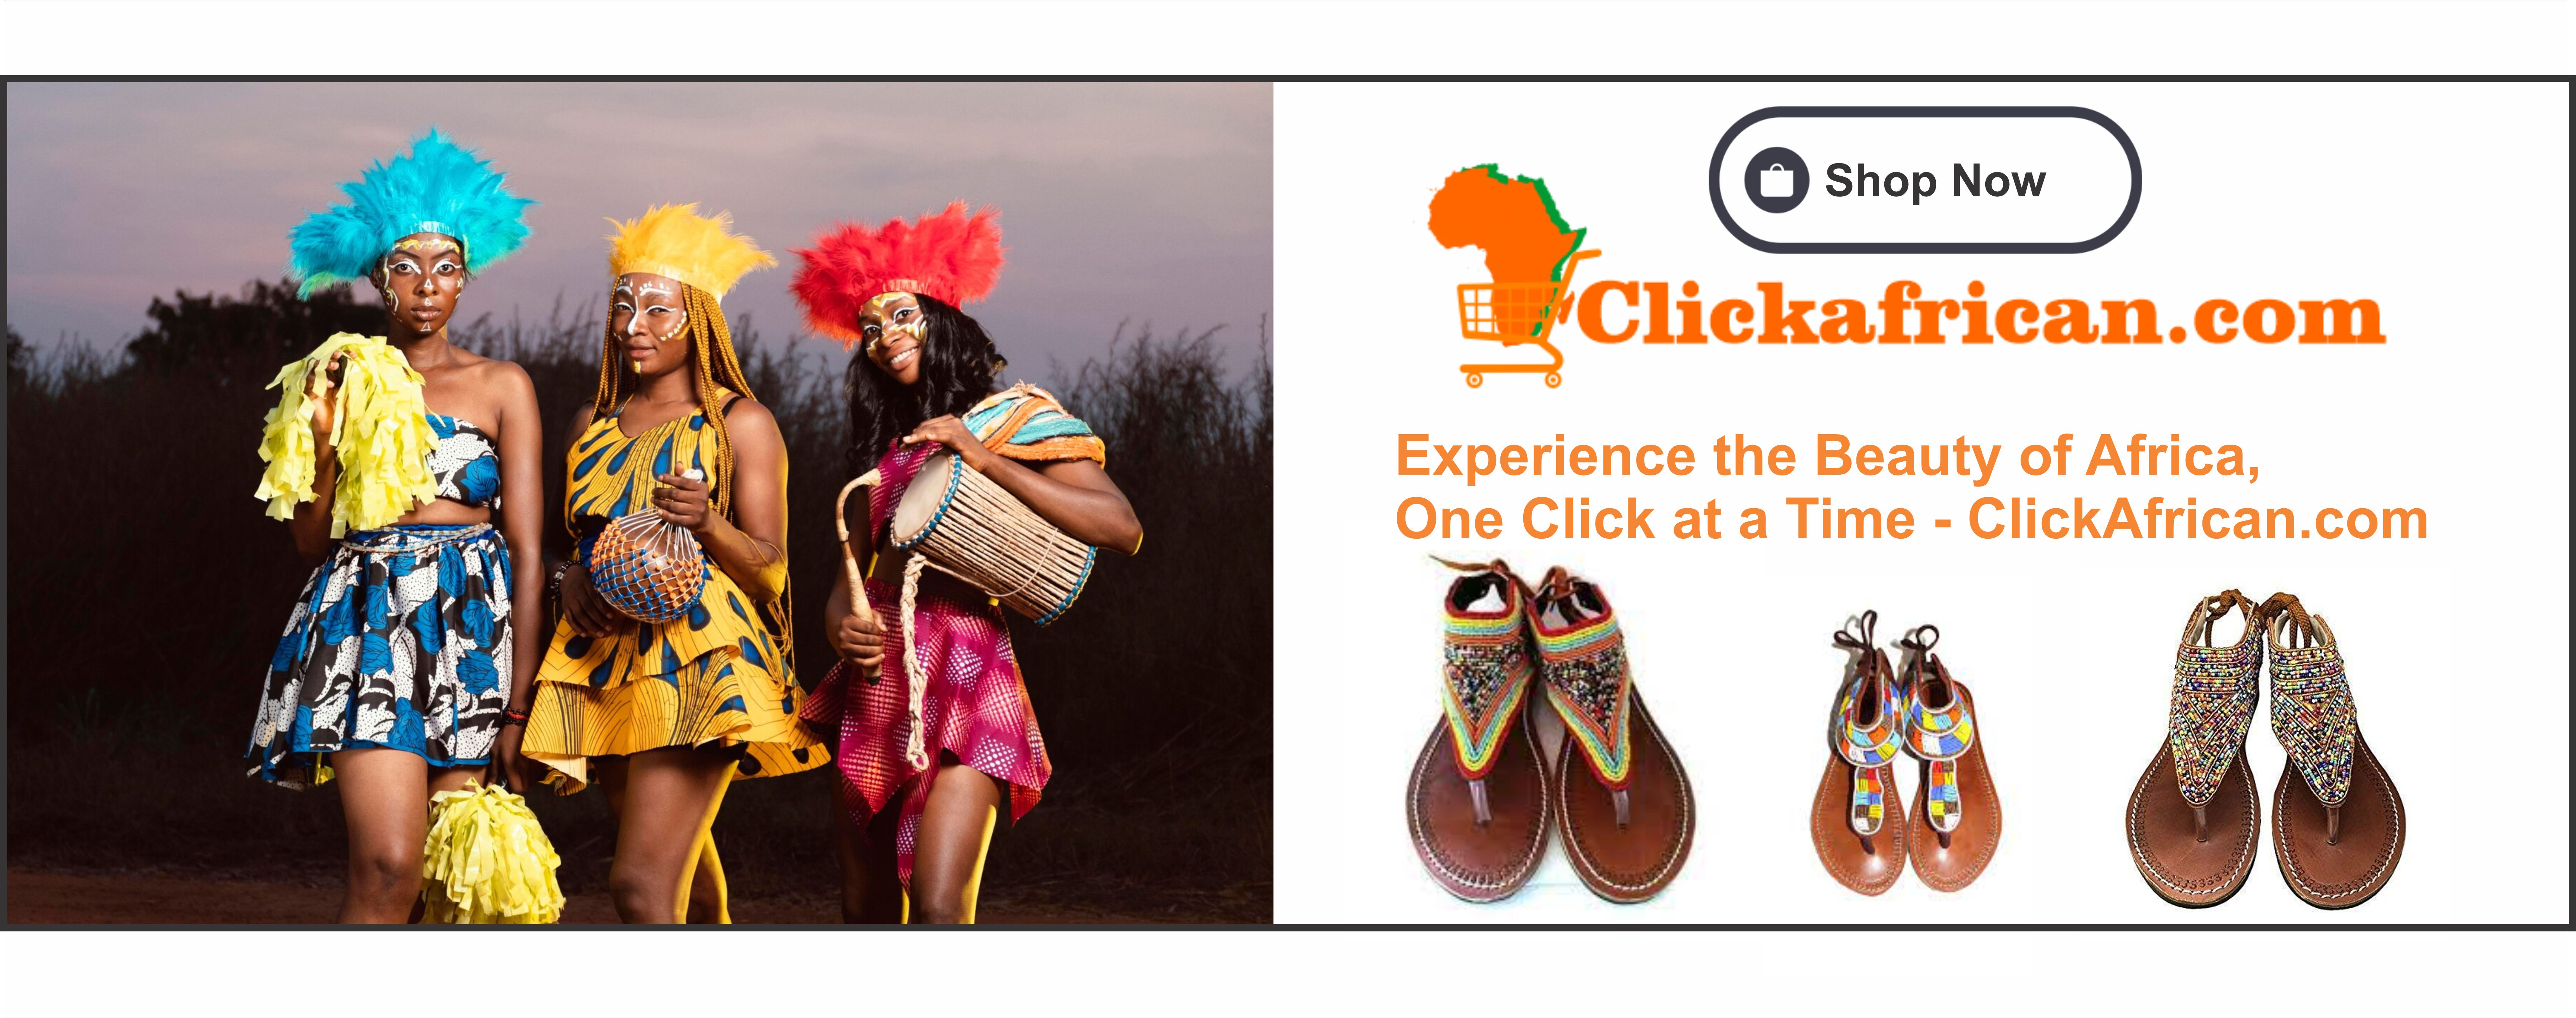 Clickafrican Marketplaces promo